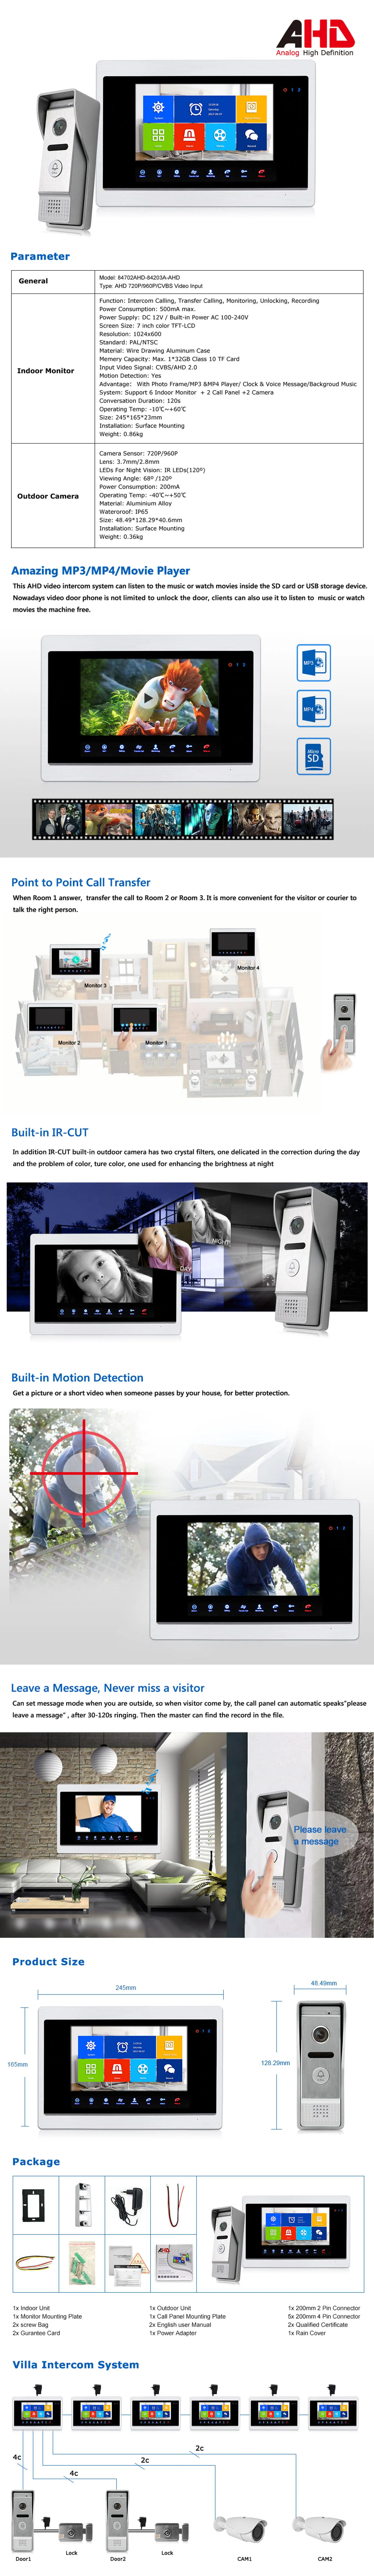 Bcomtech NEW 720P/960P AHD Video Door Phone Interphone with Waterproof Home Intercom